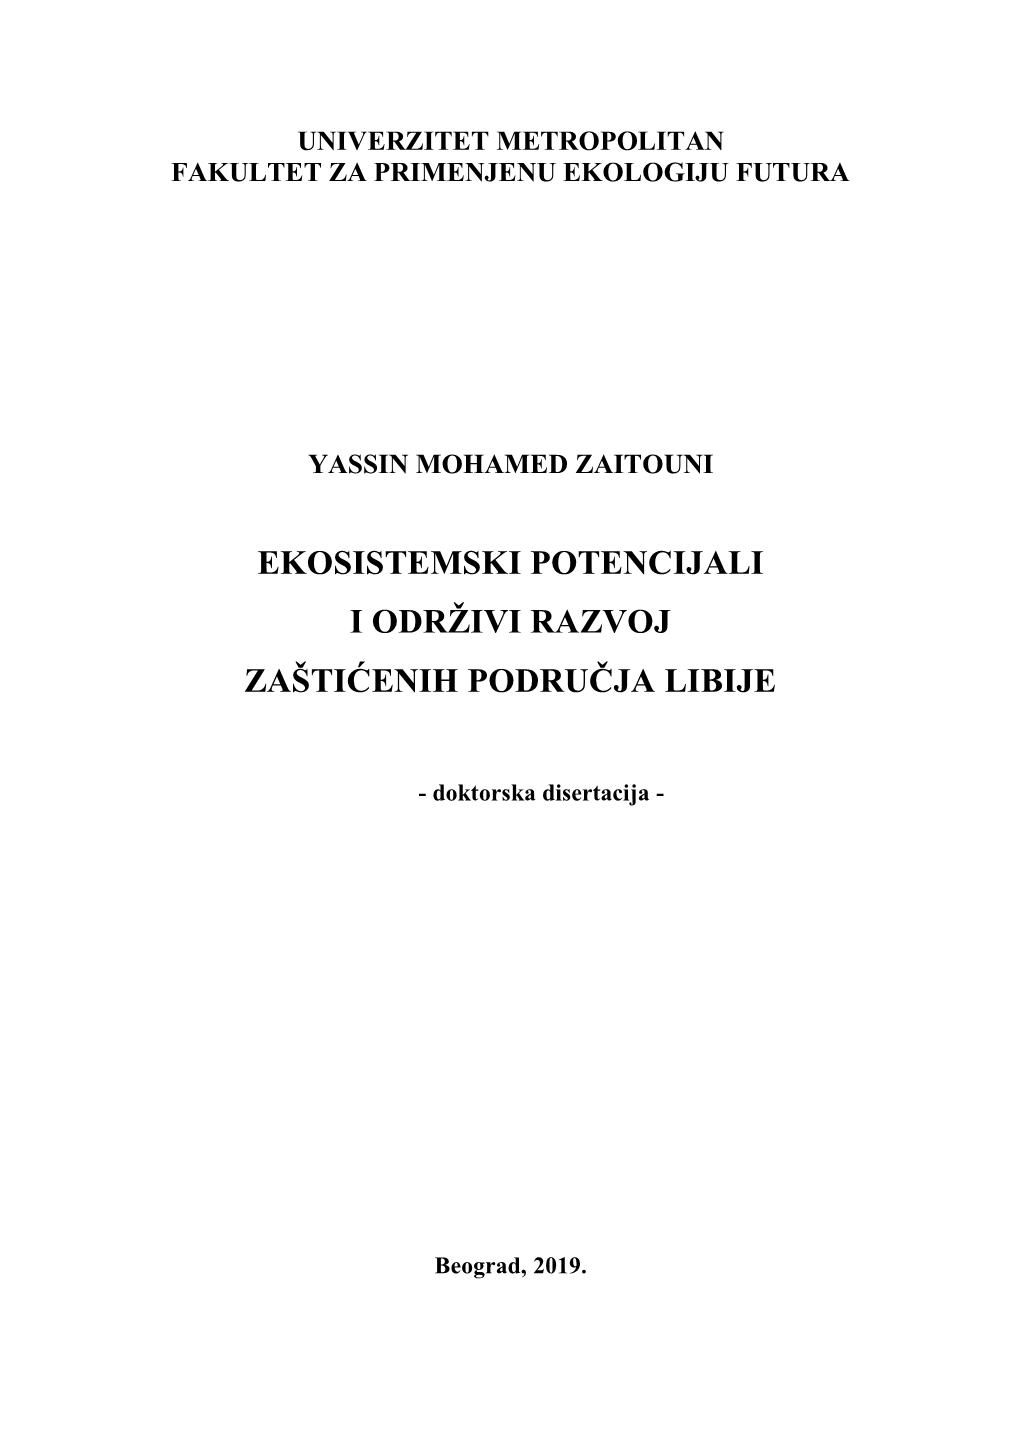 Yassin Mohamed Zaitouni – Doktorska Disertacija